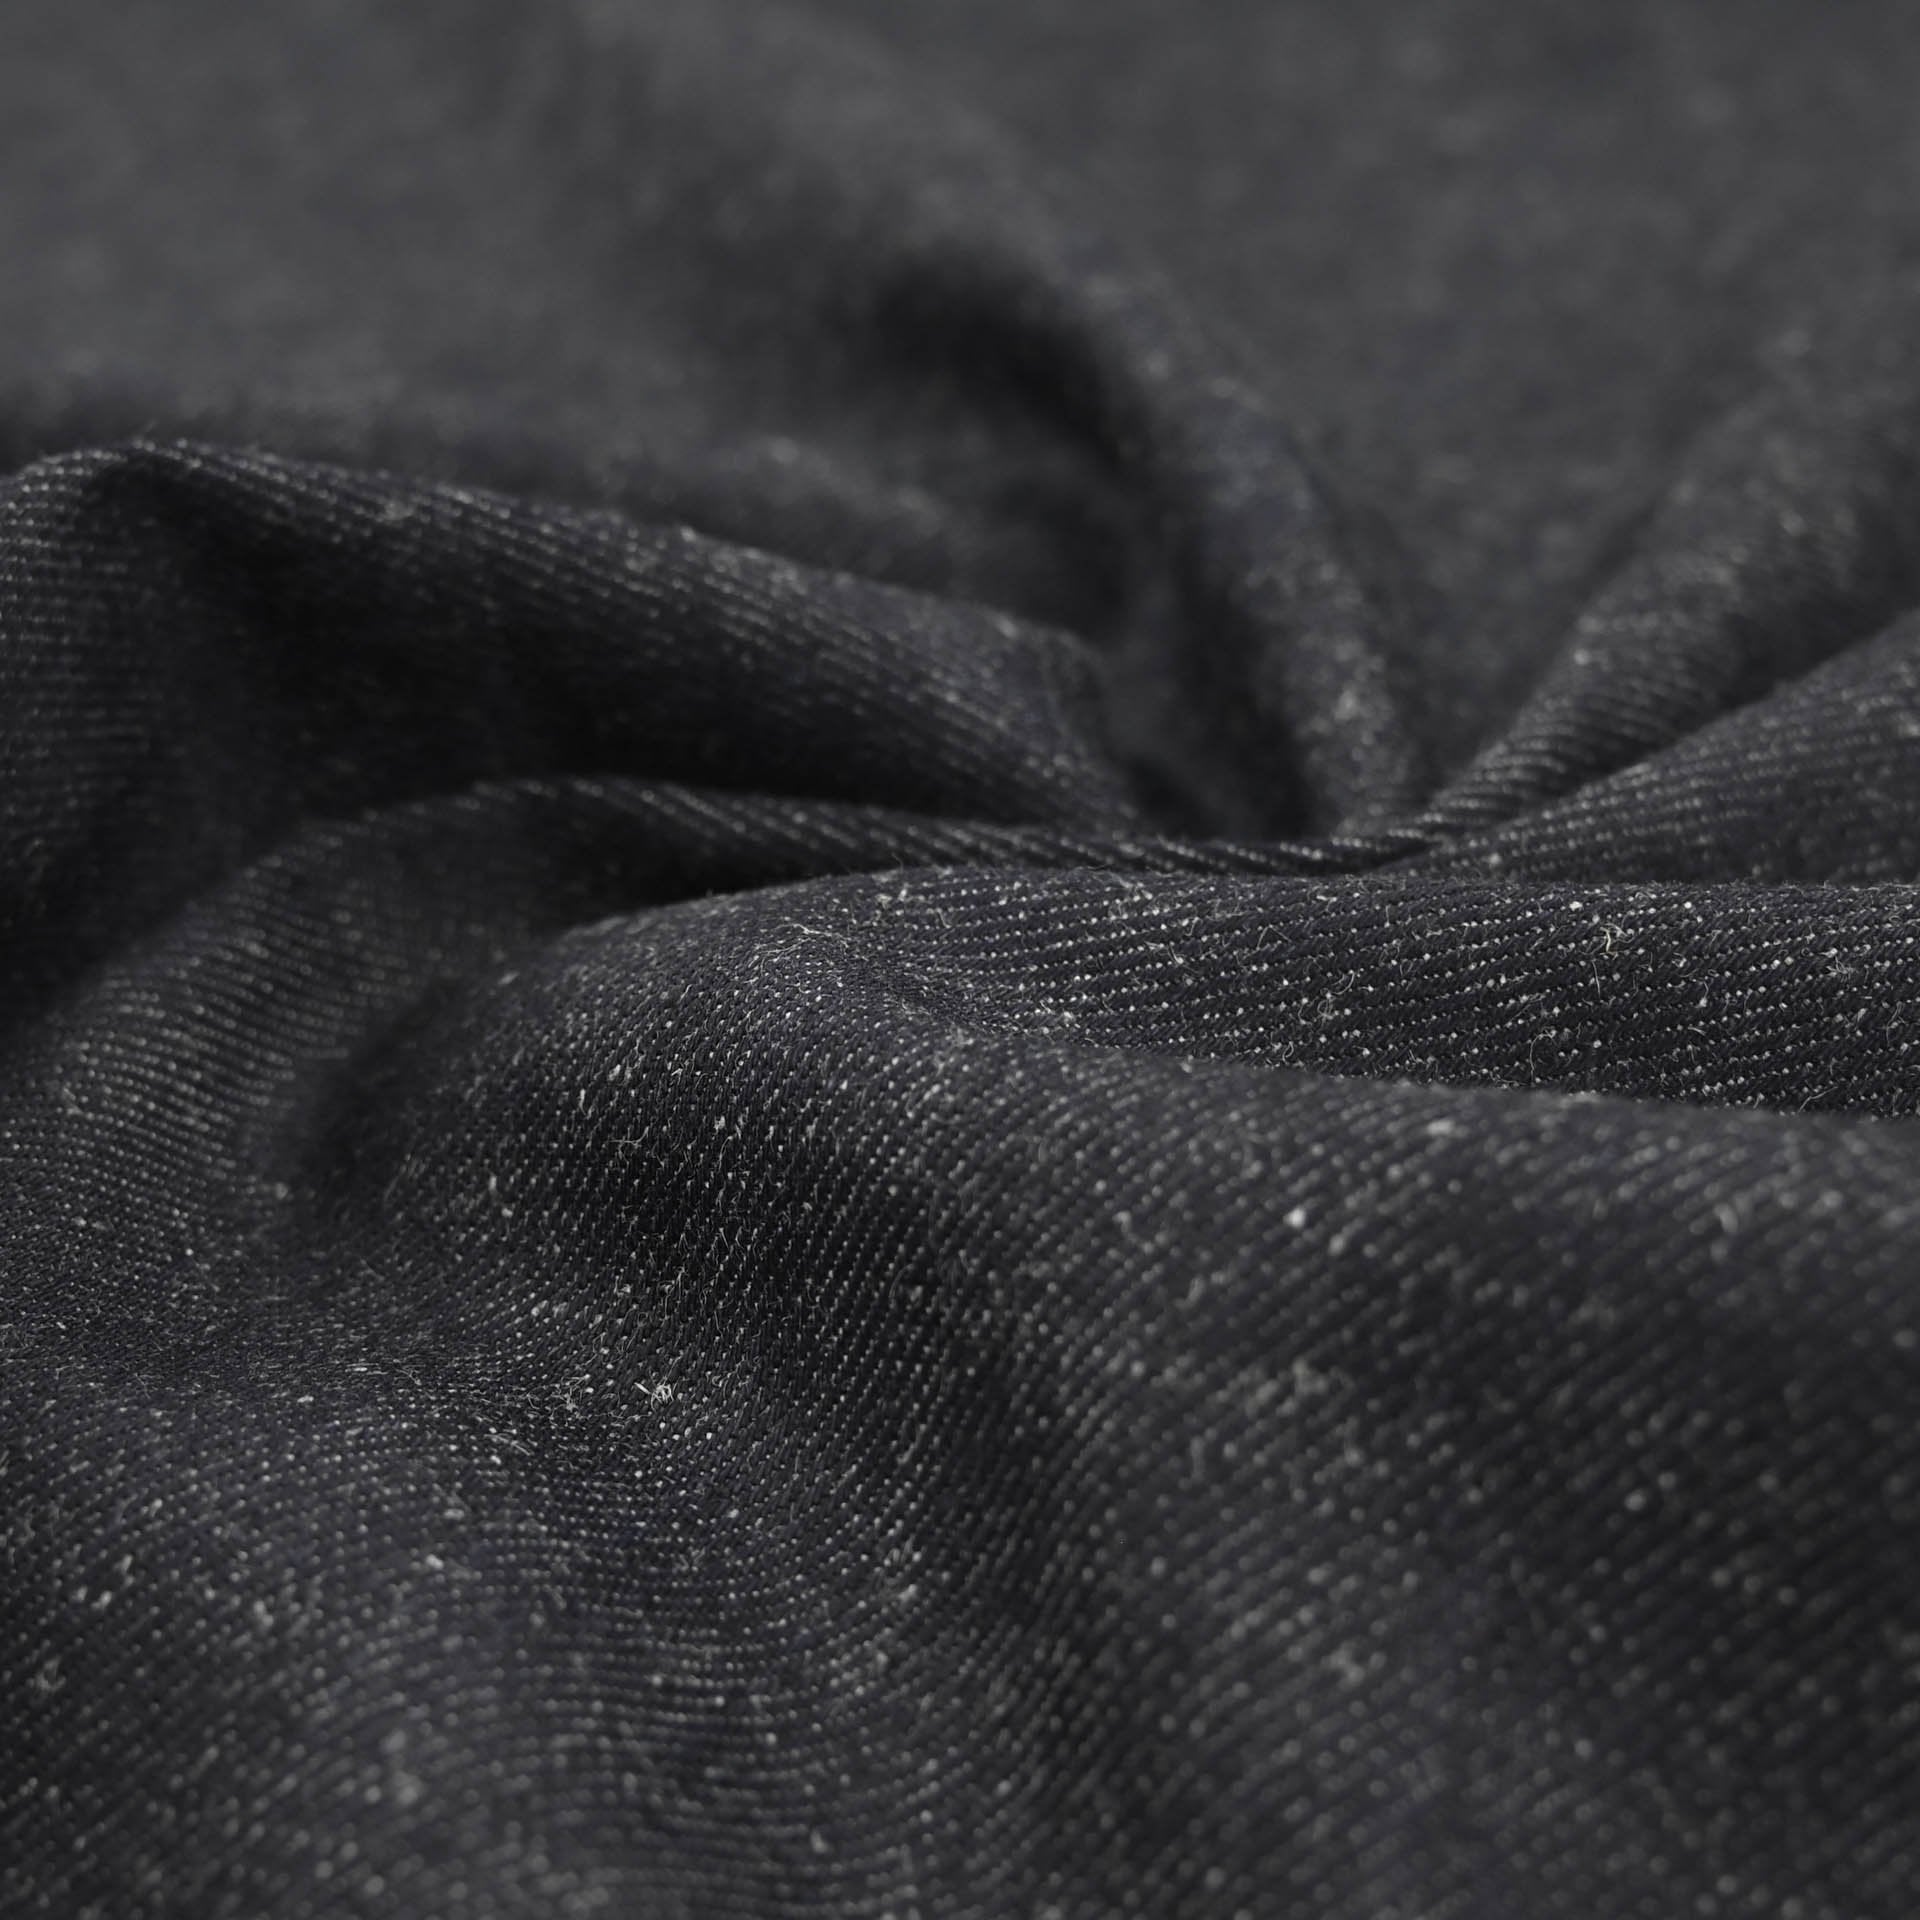 Midnight Blue Denim Fabric 99472